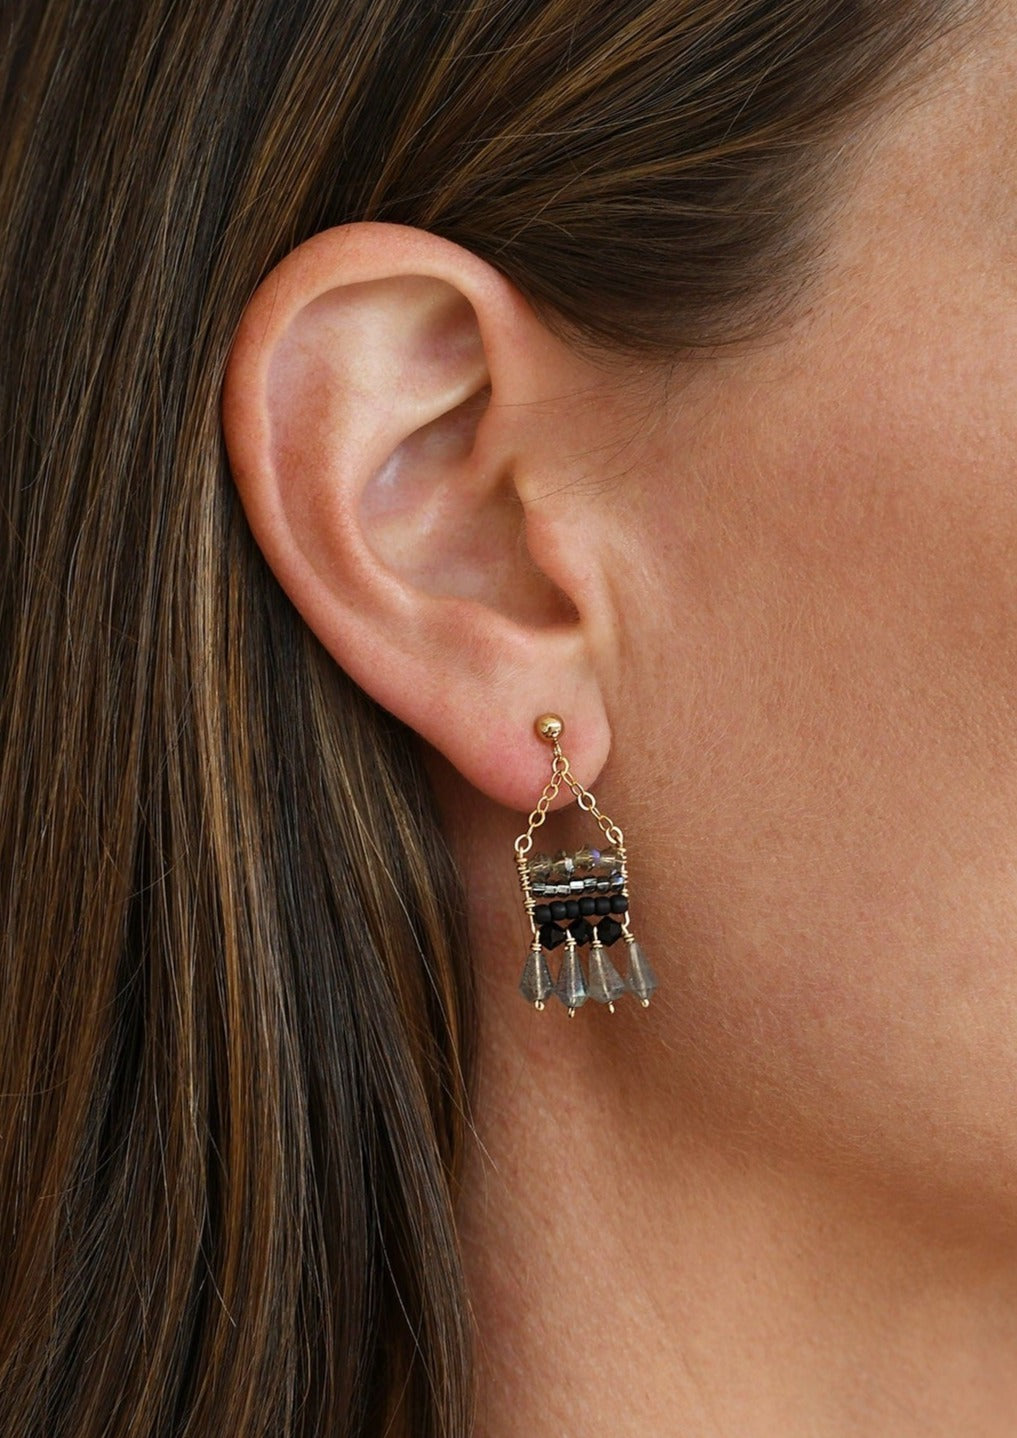 Semi Precious XS Beaded Pendant Earrings With Teardrops - SHINY GRAPHITE/BLACK/TRANSLUCENT GREY